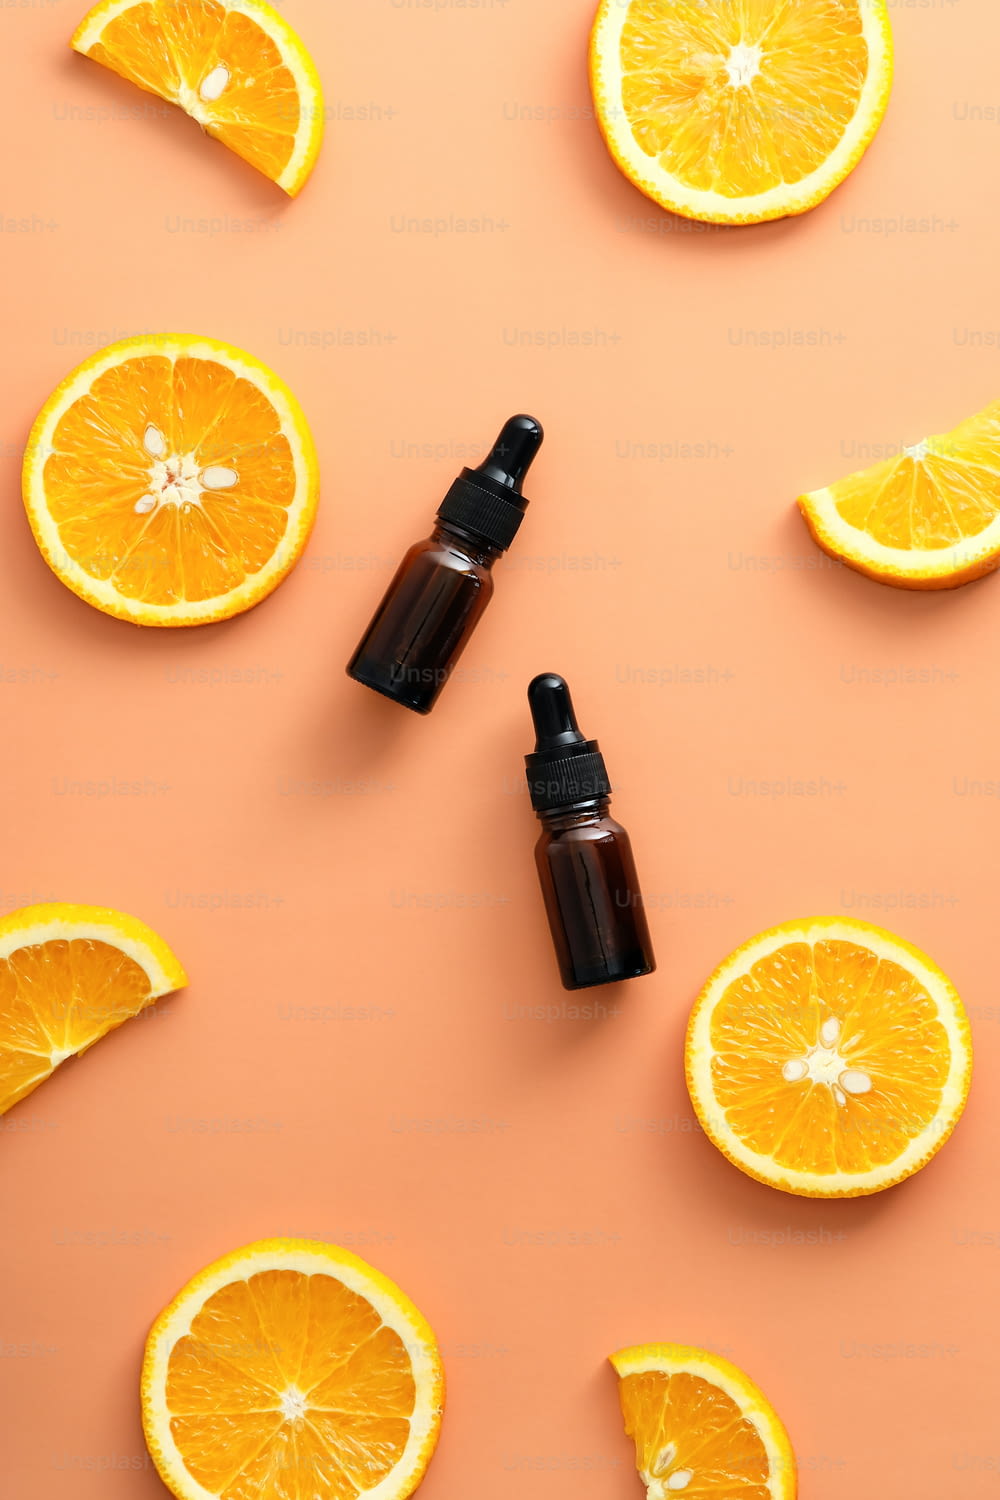 Frascos conta-gotas de soro de vitamina C com vista superior laranja fatiada. Design de produtos de beleza natural.